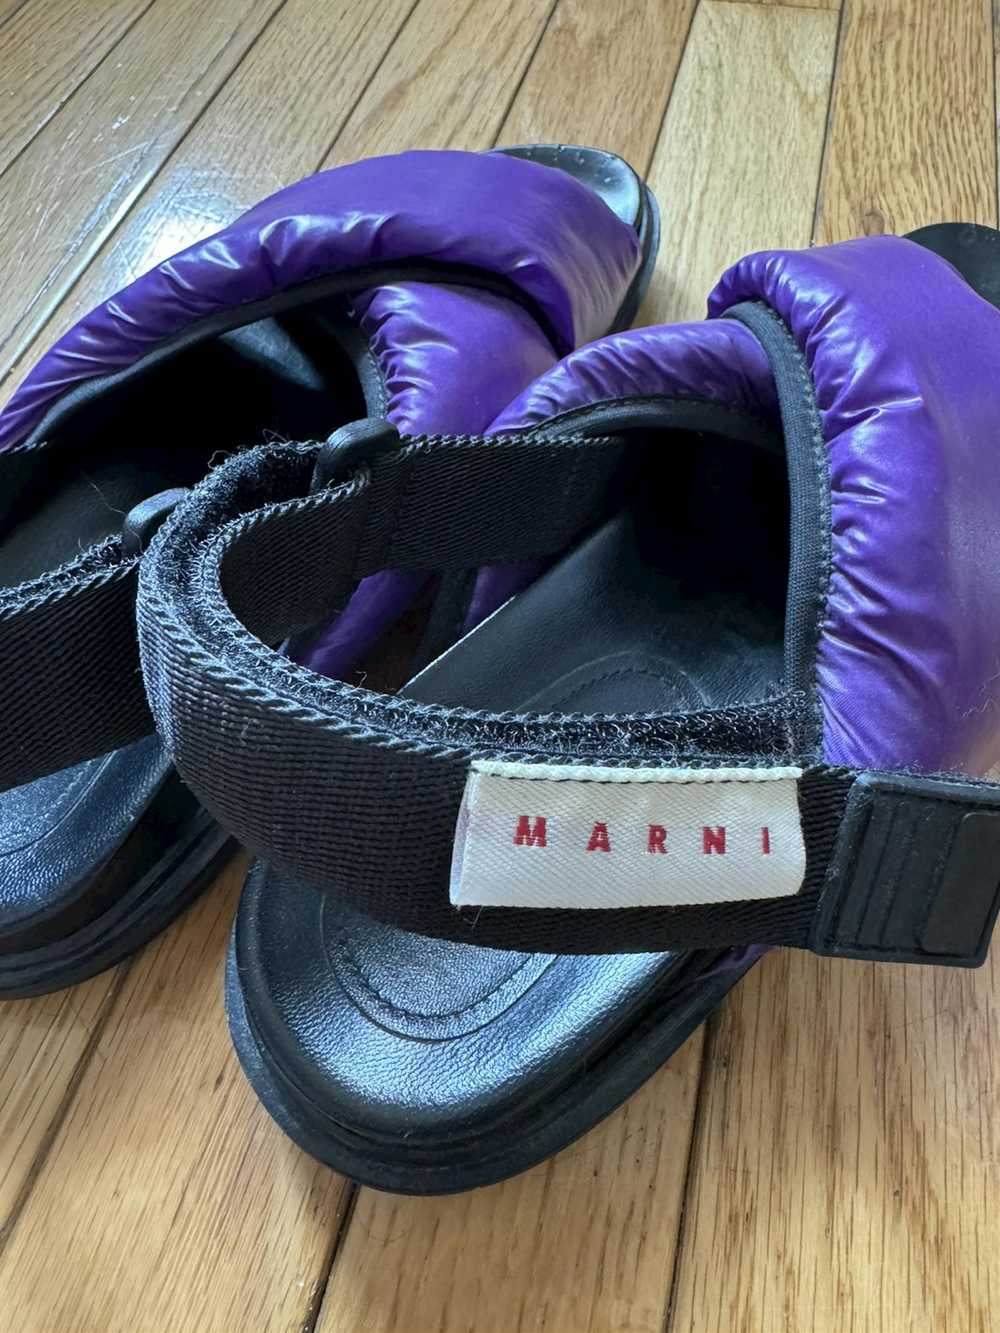 Marni Marni Nylon Puffer Sandals - image 2